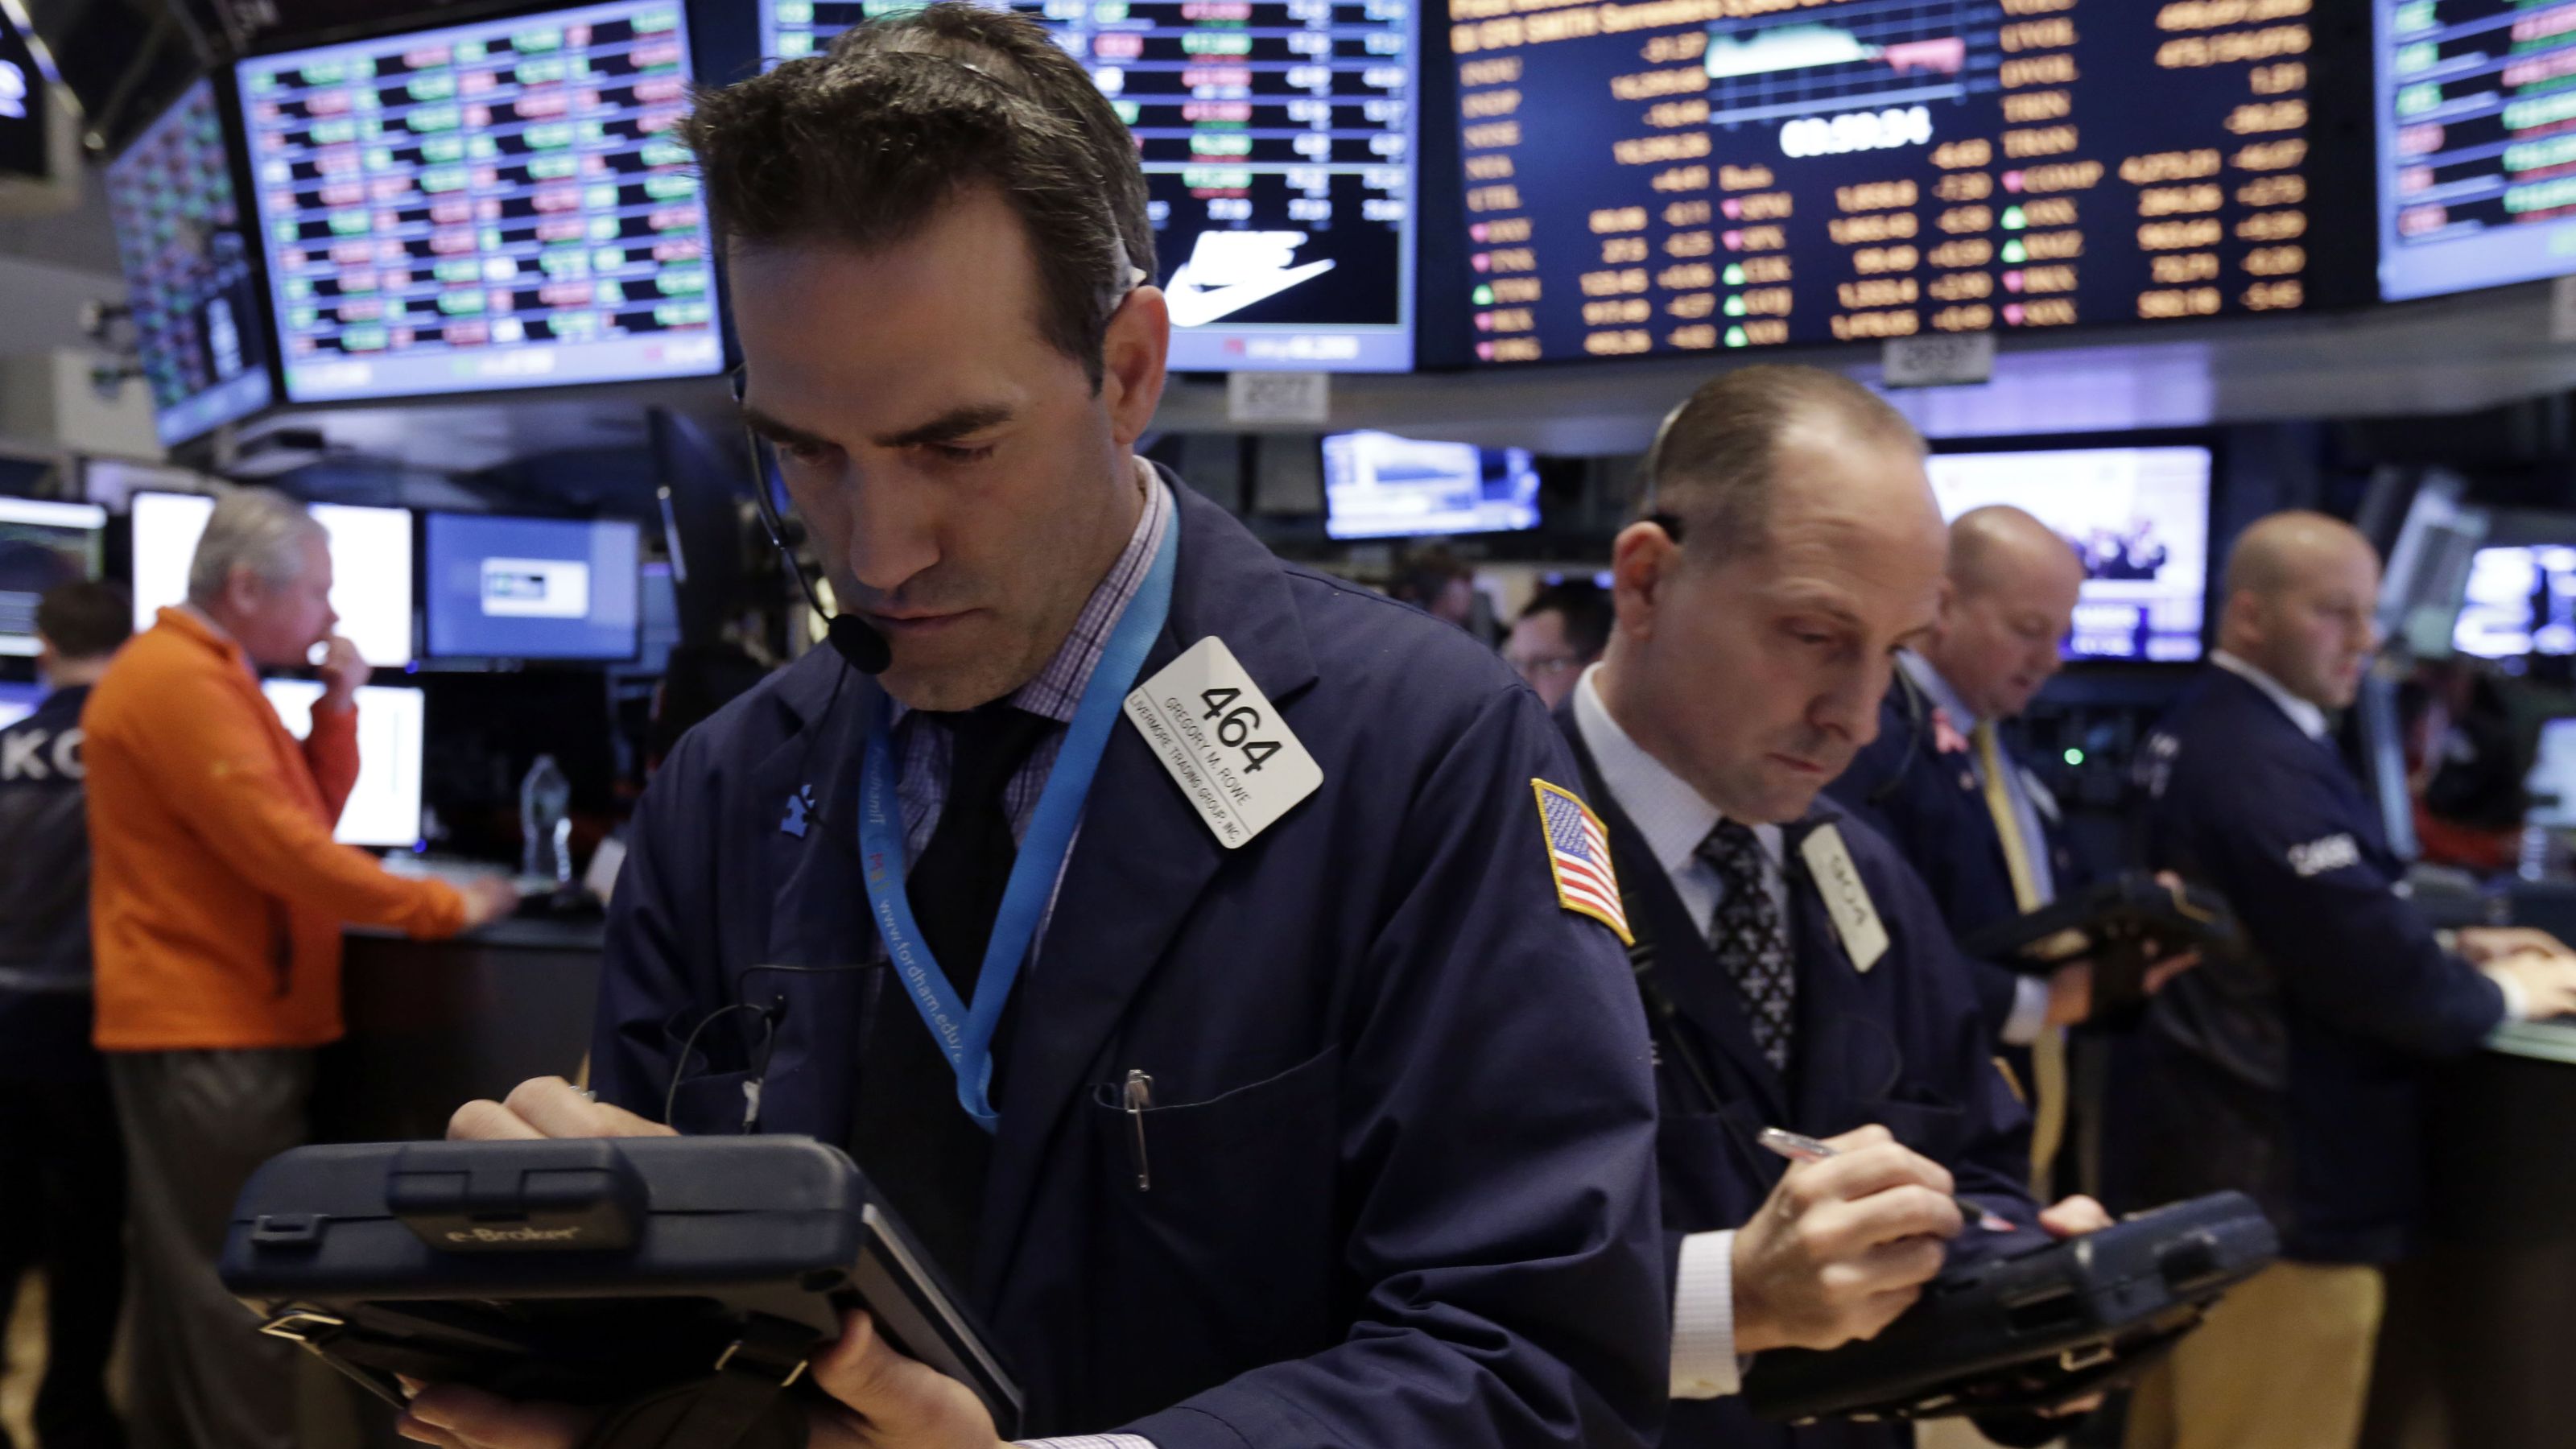 The Wall Street Market Darknet